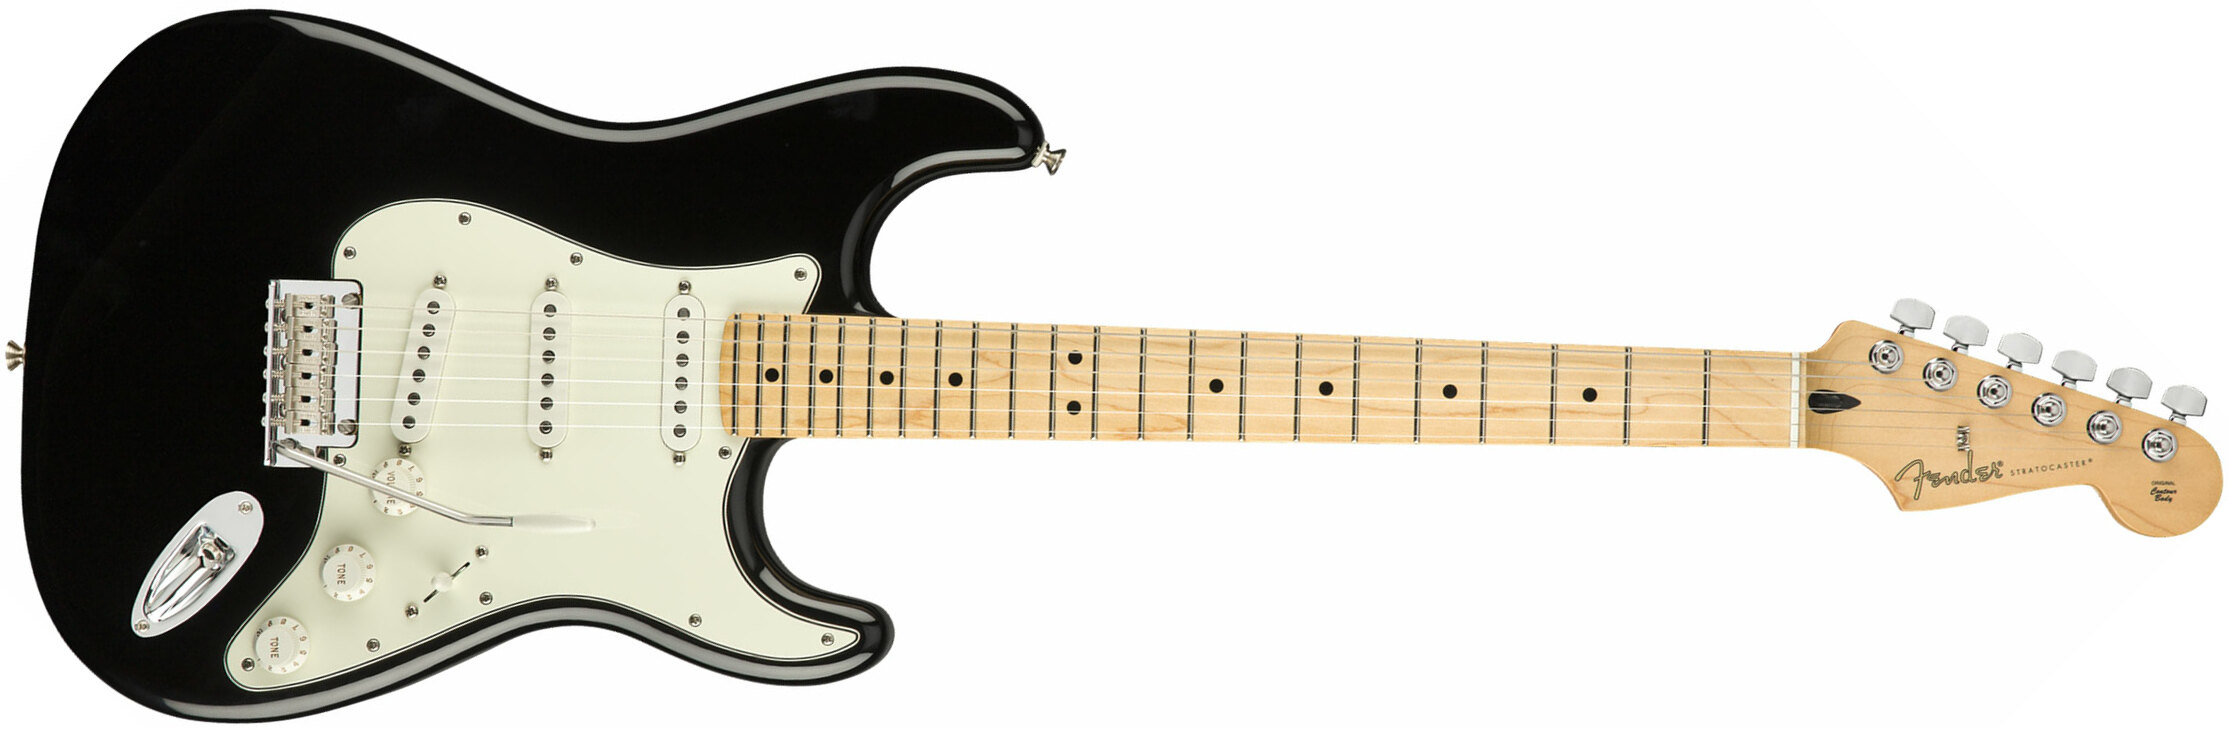 Fender Strat Player Mex Sss Mn - Black - Str shape electric guitar - Main picture